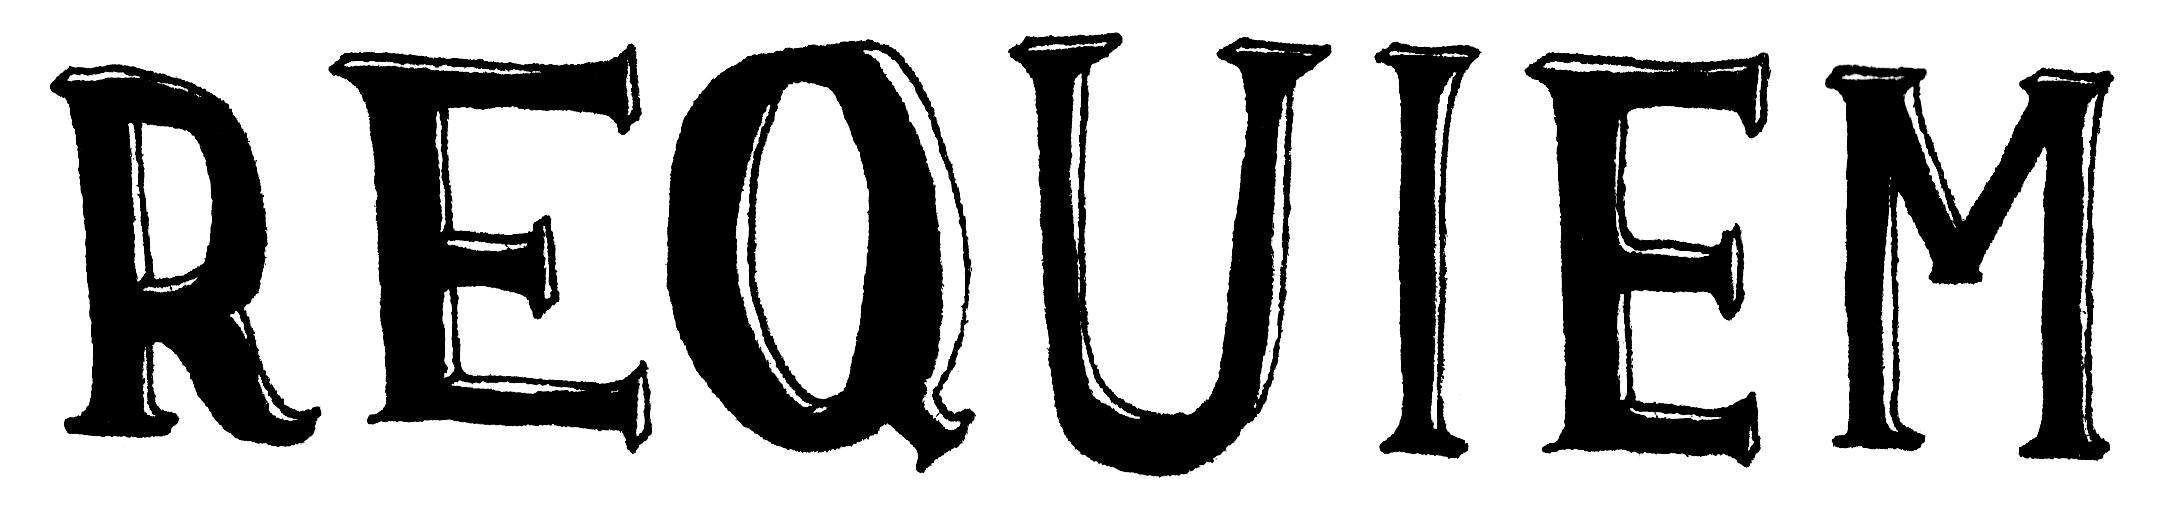 File:Verdena, Requiem (Logo).png - Wikimedia Commons